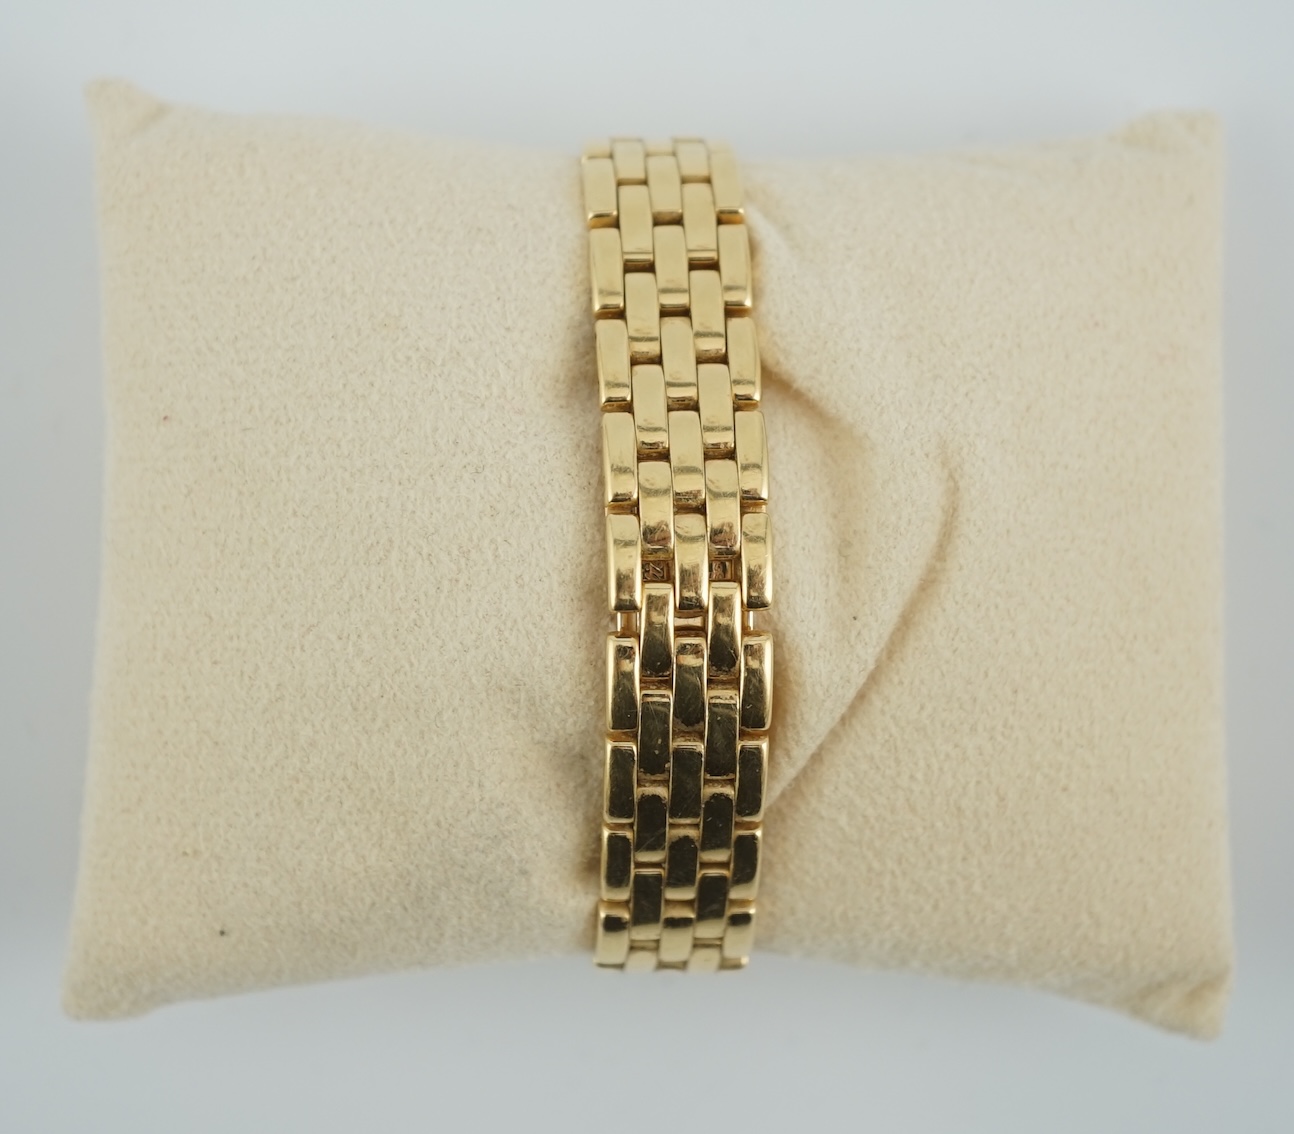 A lady's 18ct gold Cartier Panthere quartz wrist watch